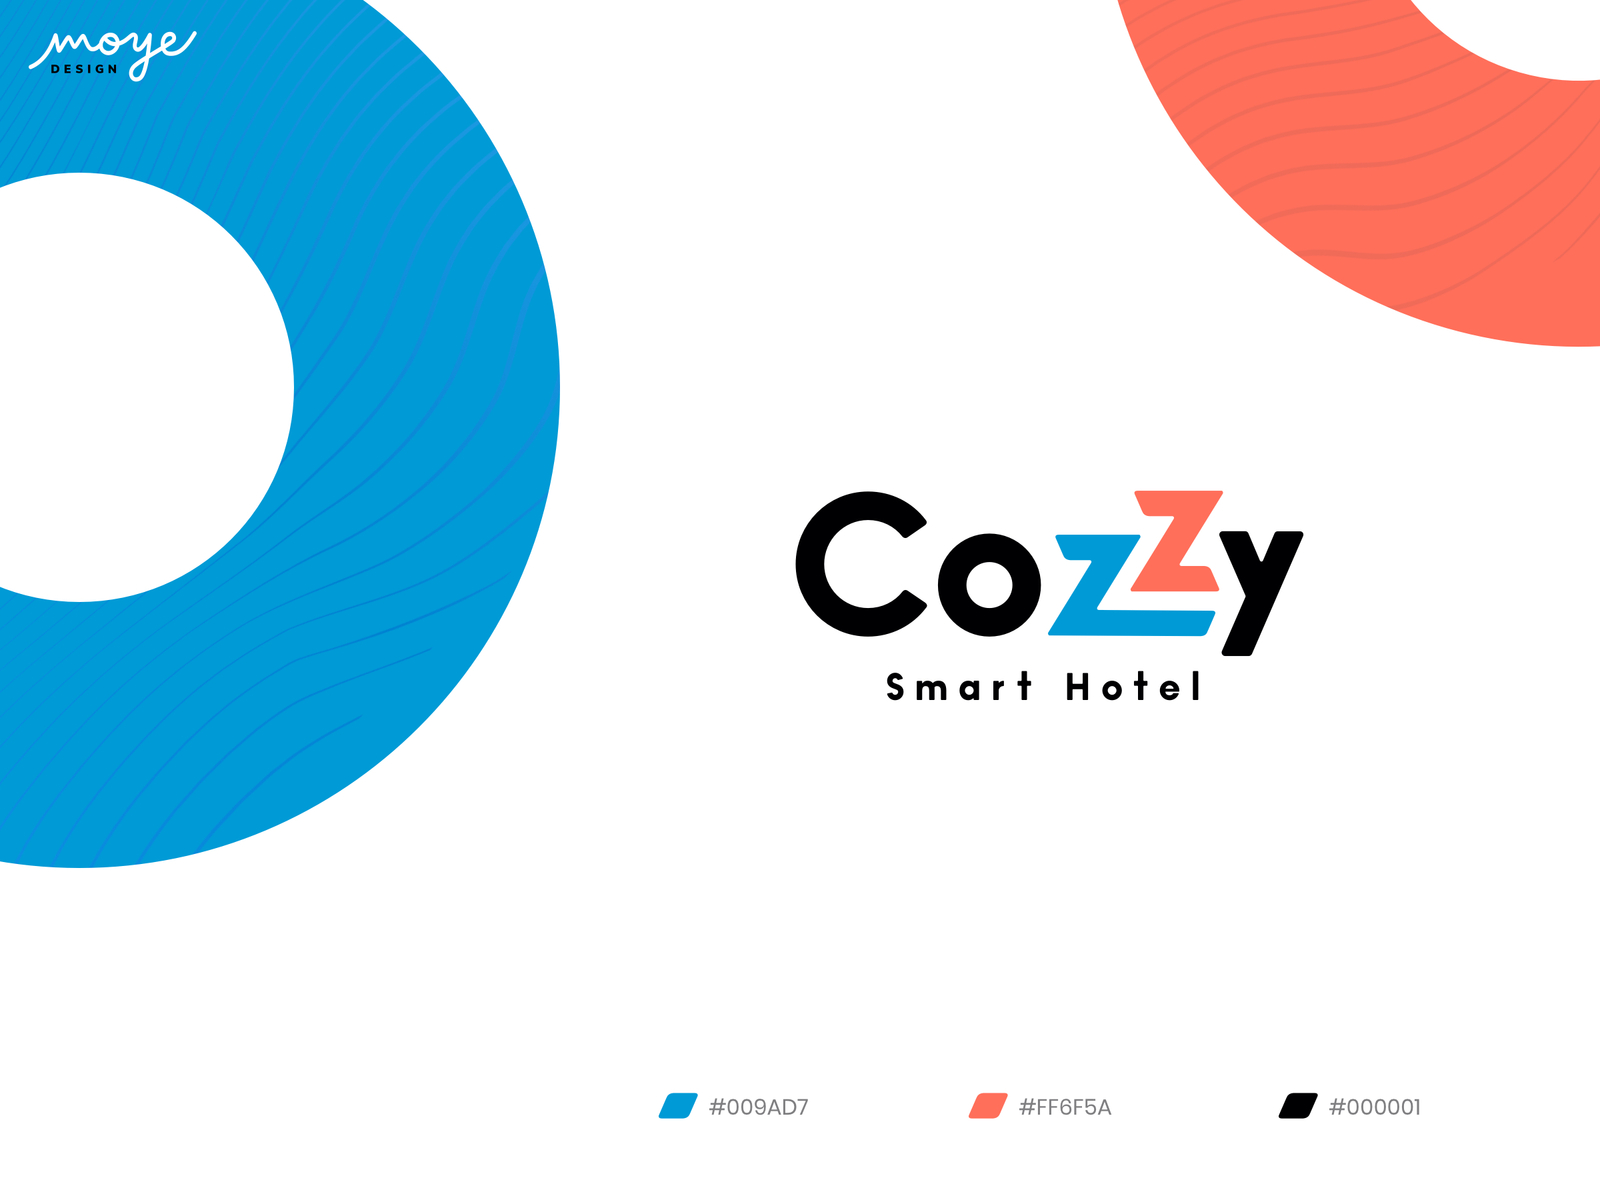 CoZzy - Smart Hotel by moye_dsgn on Dribbble